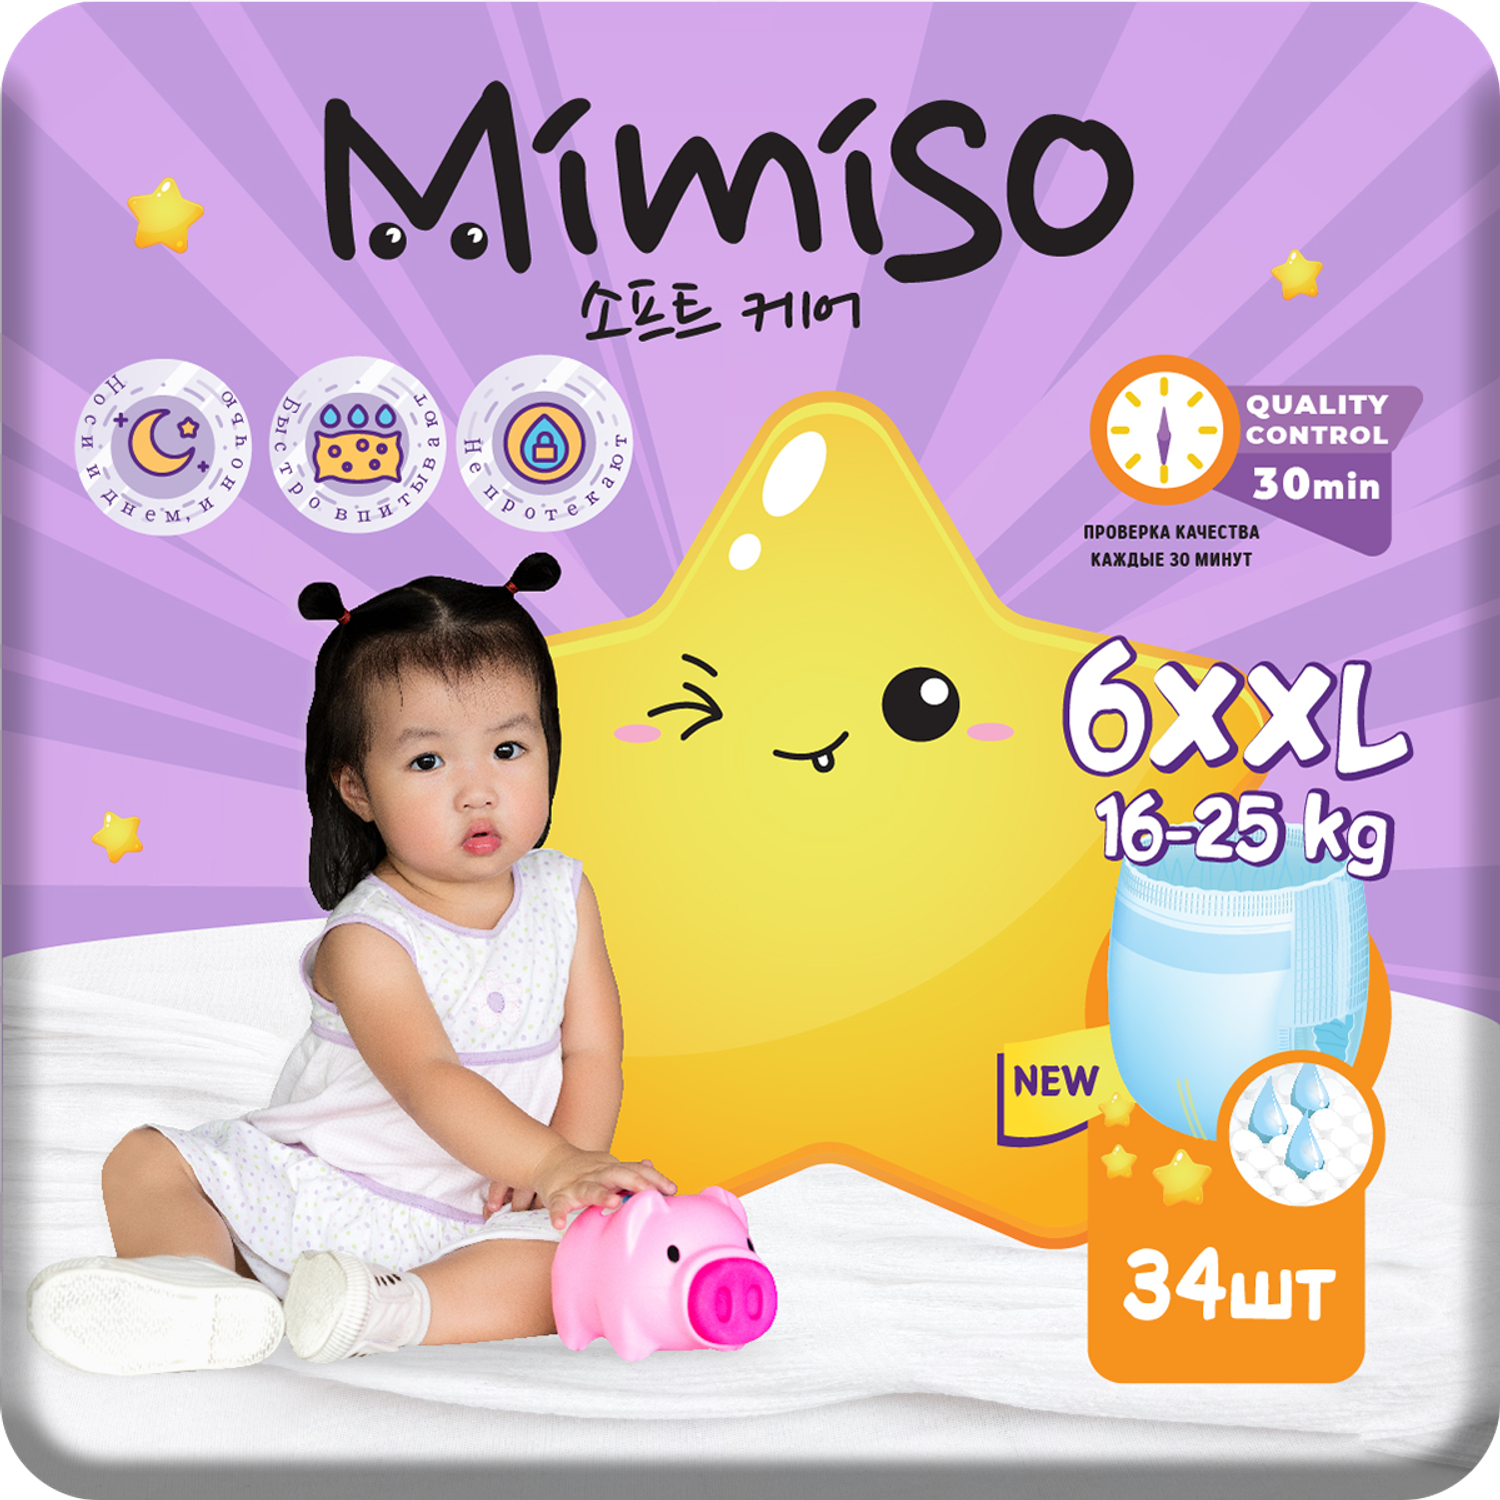 Трусики Mimiso одноразовые для детей 6/XXL 16-25 кг 34шт - фото 1